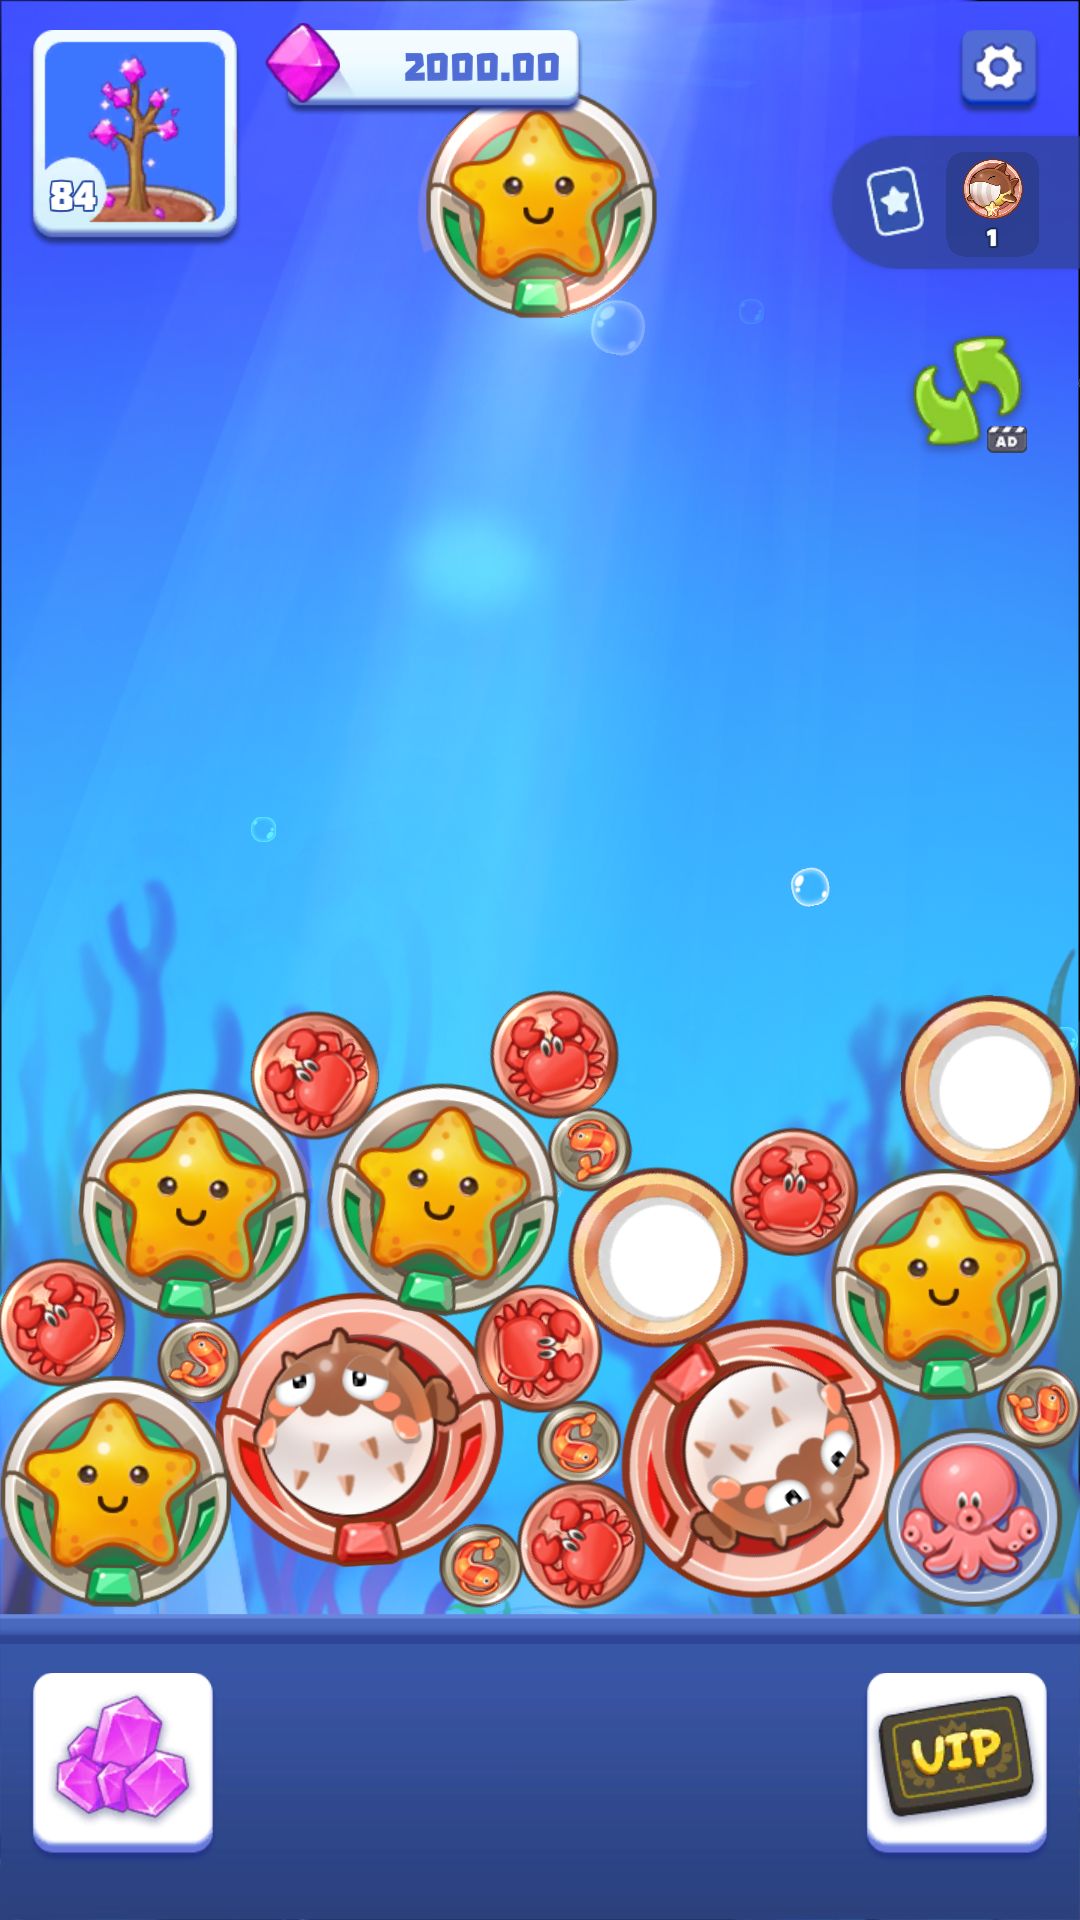 Ocean Merge: Gather Gem - Android game screenshots.